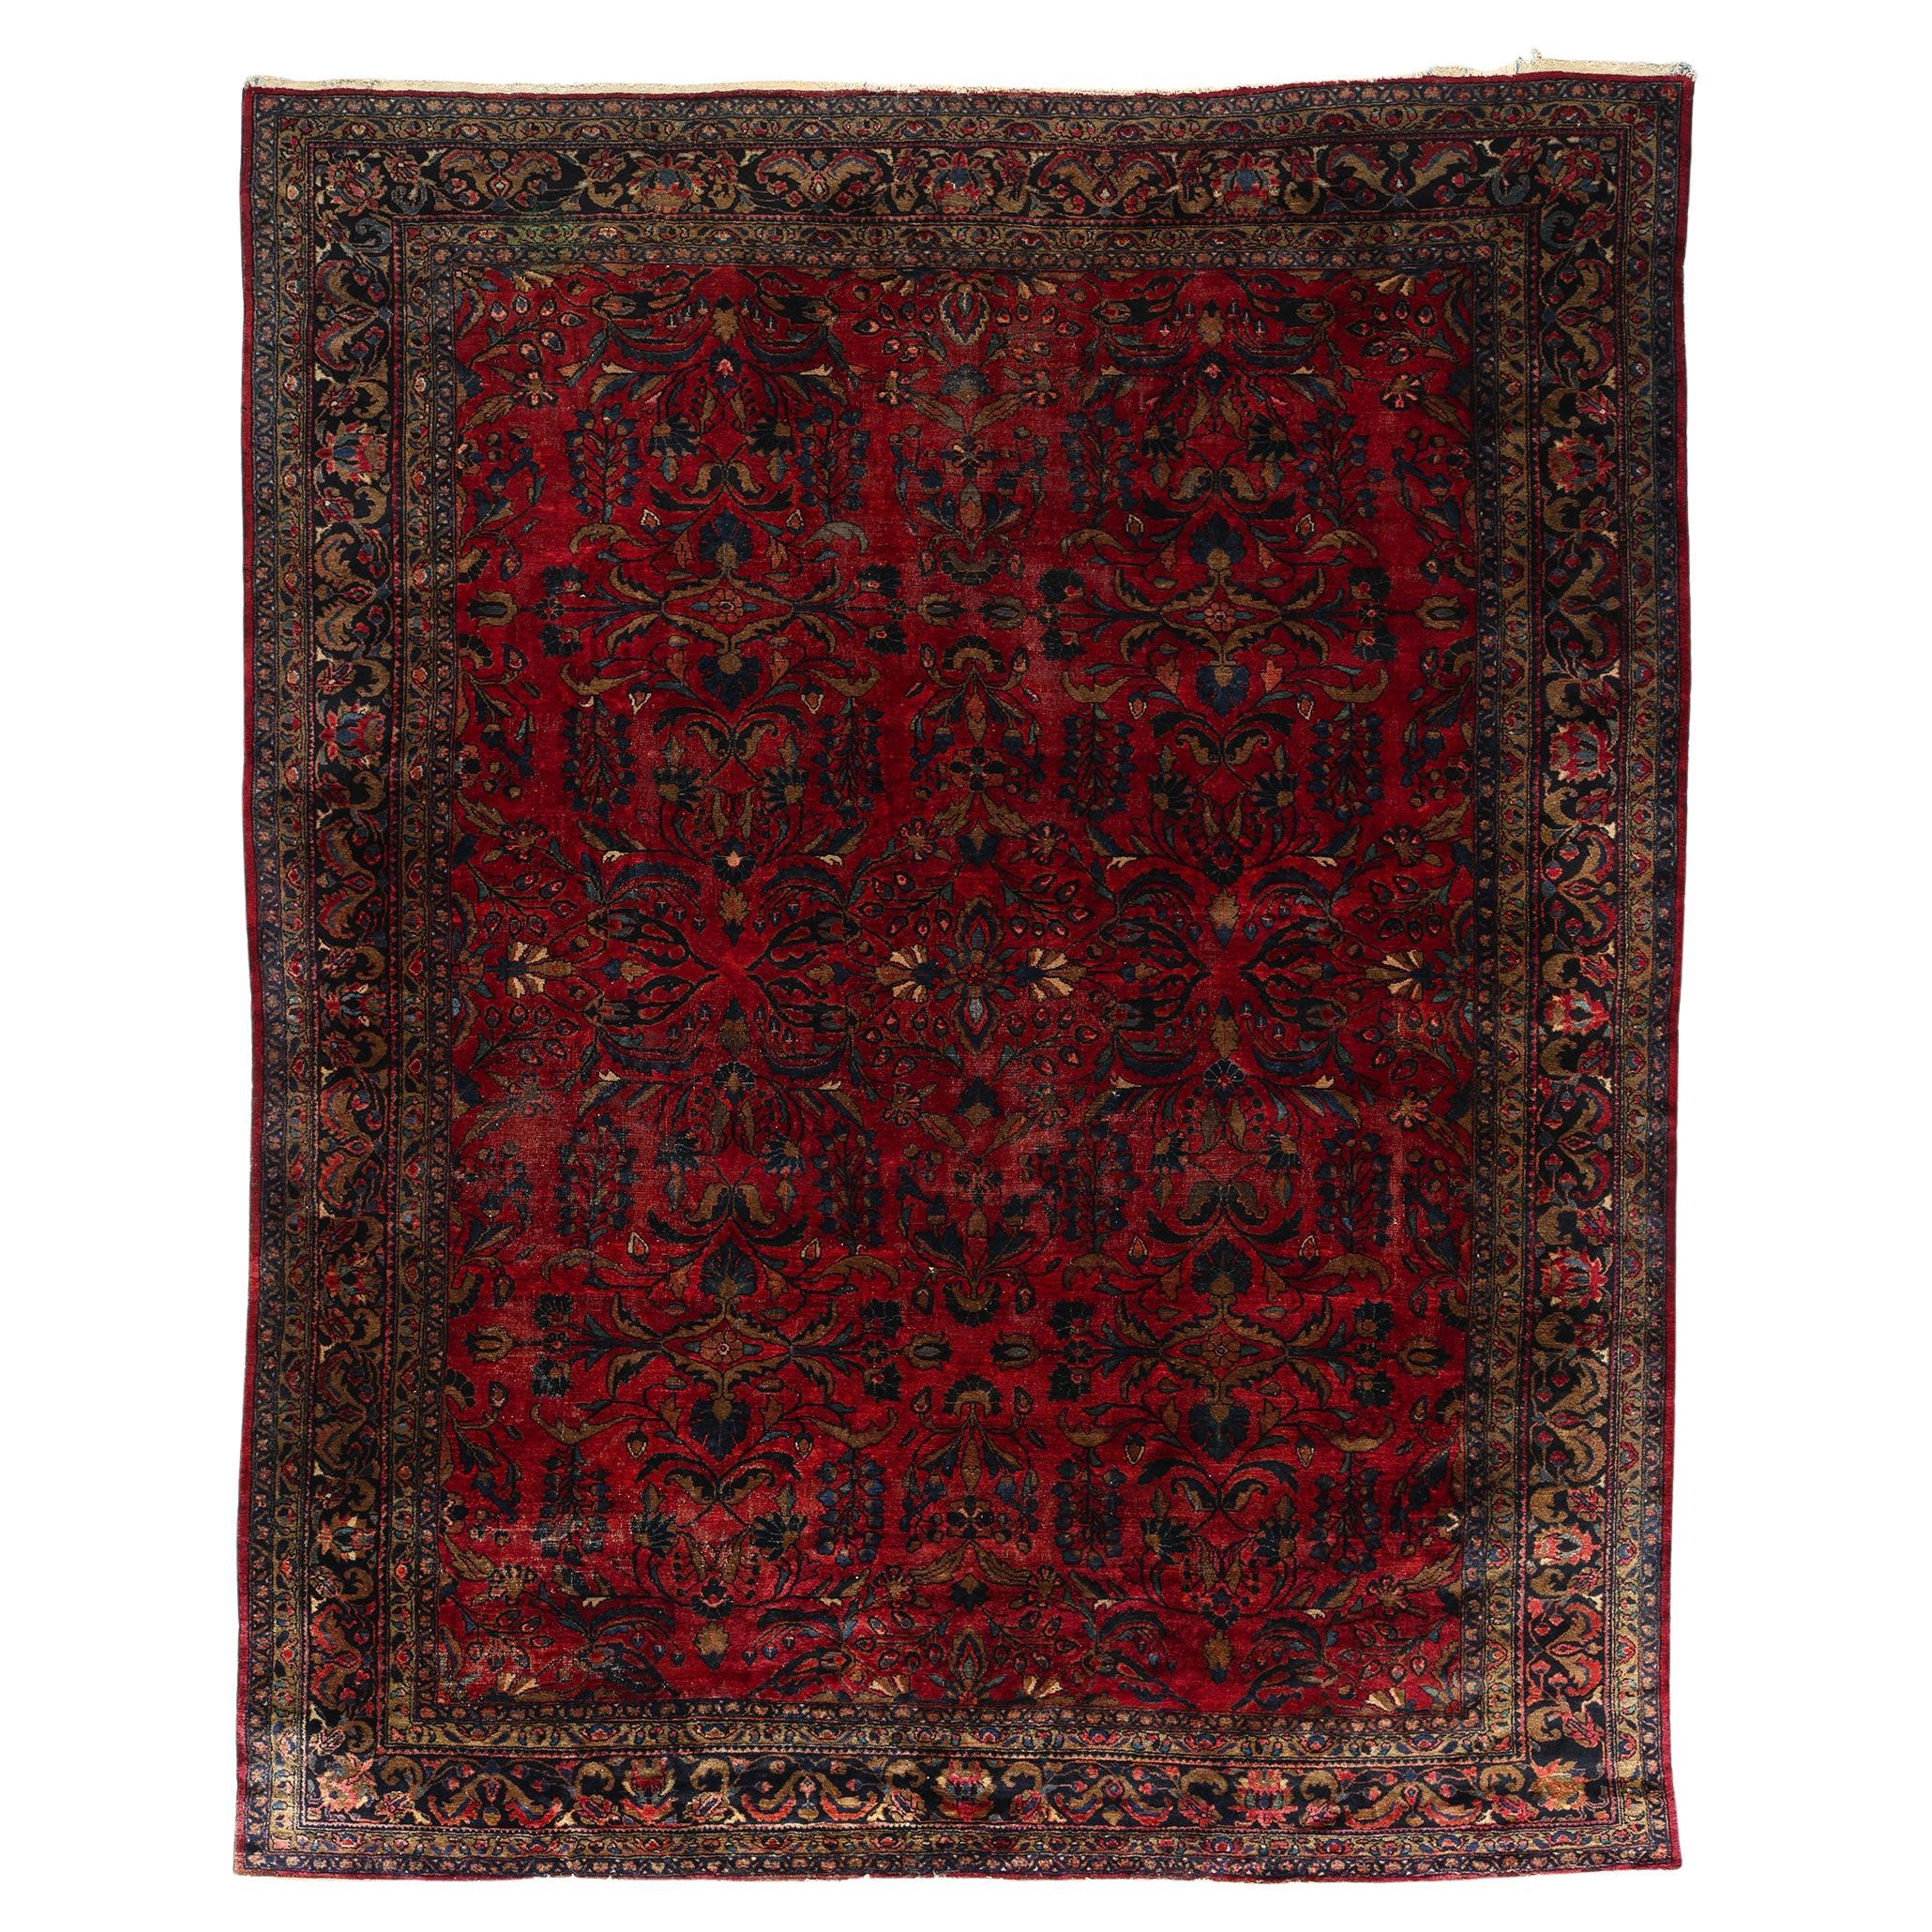 Antique Red Persian Lilihan Carpet